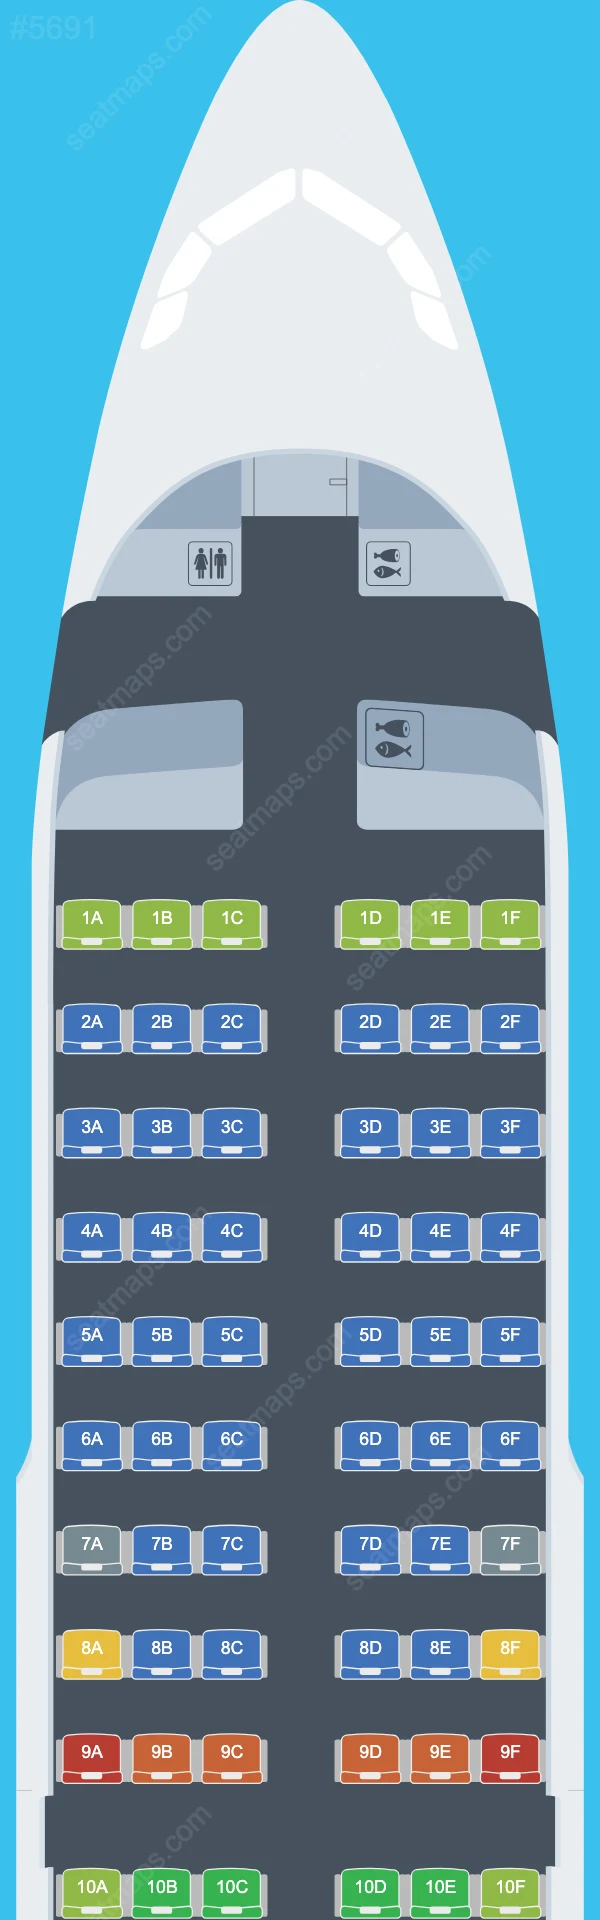 British Airways Airbus A319 Seat Maps A319-100 V.2